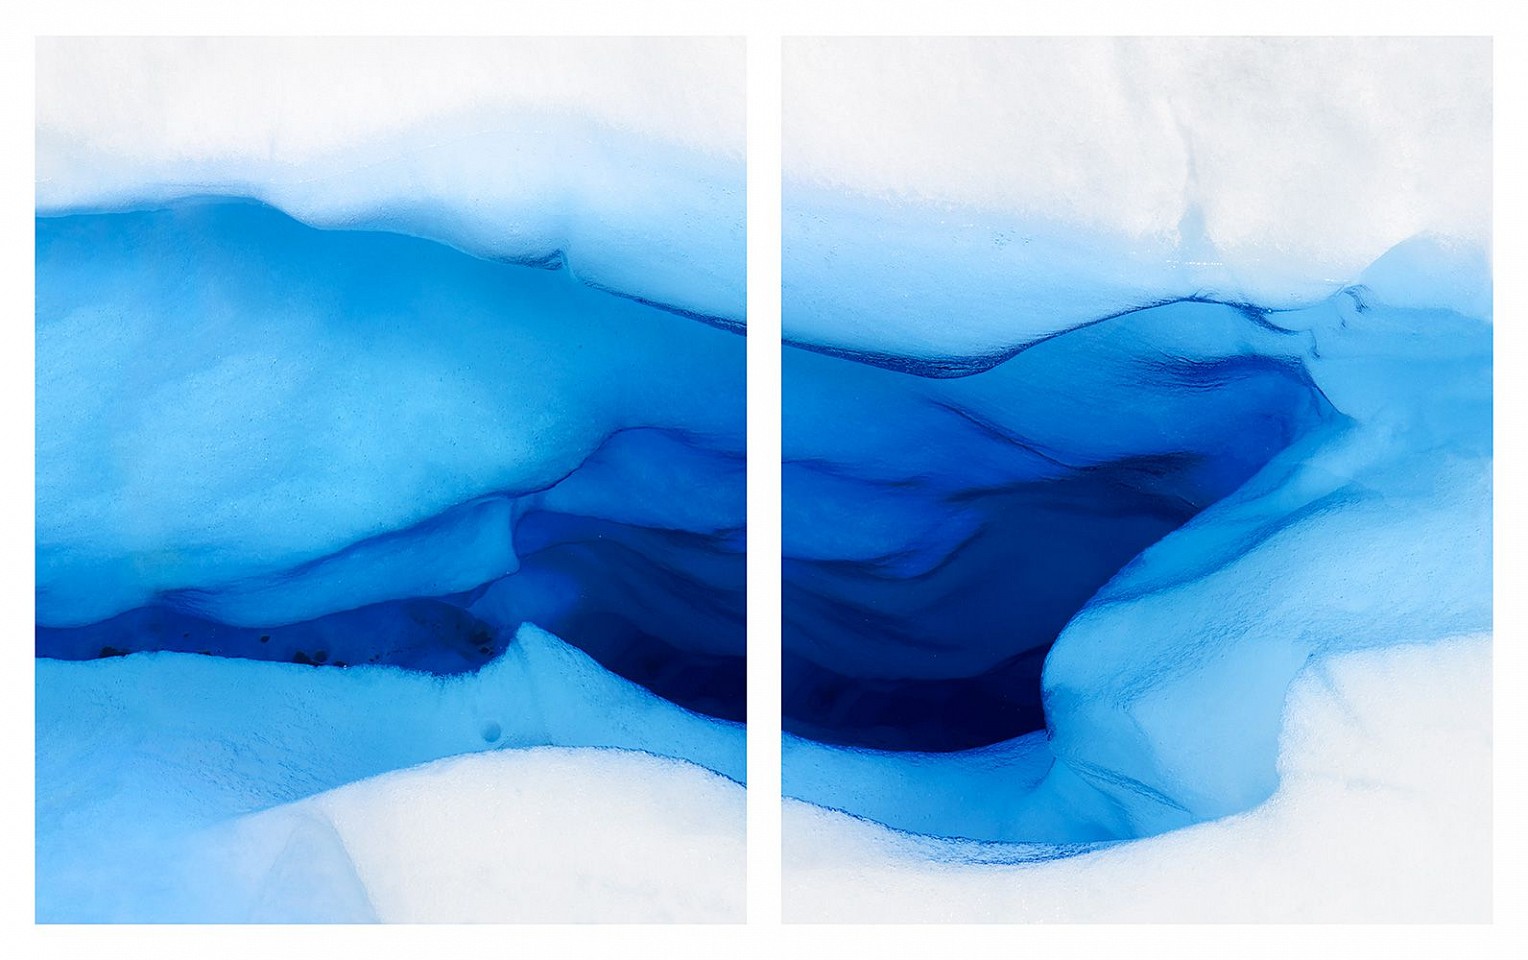 Jonathan Smith, Glacier #22
Chromogenic Print
Available in: 30 x 48 inches, Edition of 8 | 40 x 64 inches, Edition of 5 | 50 x 80 inches, Edition of 3
7564